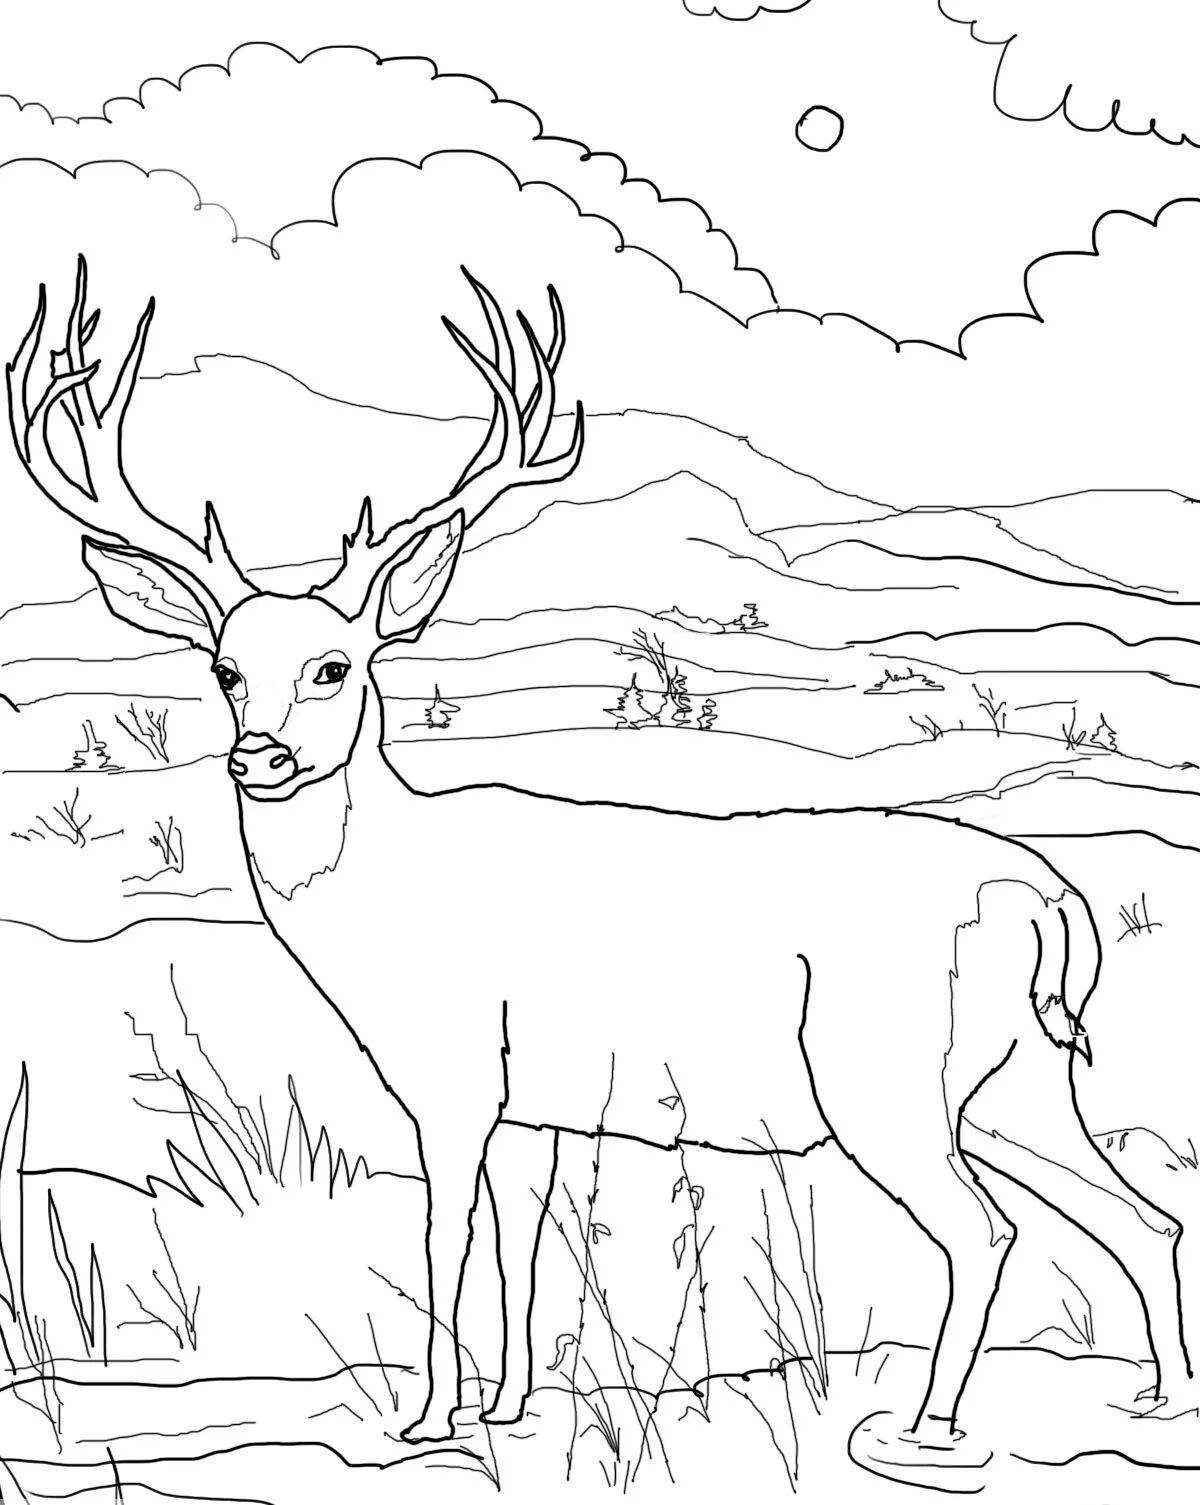 Royal red deer coloring page